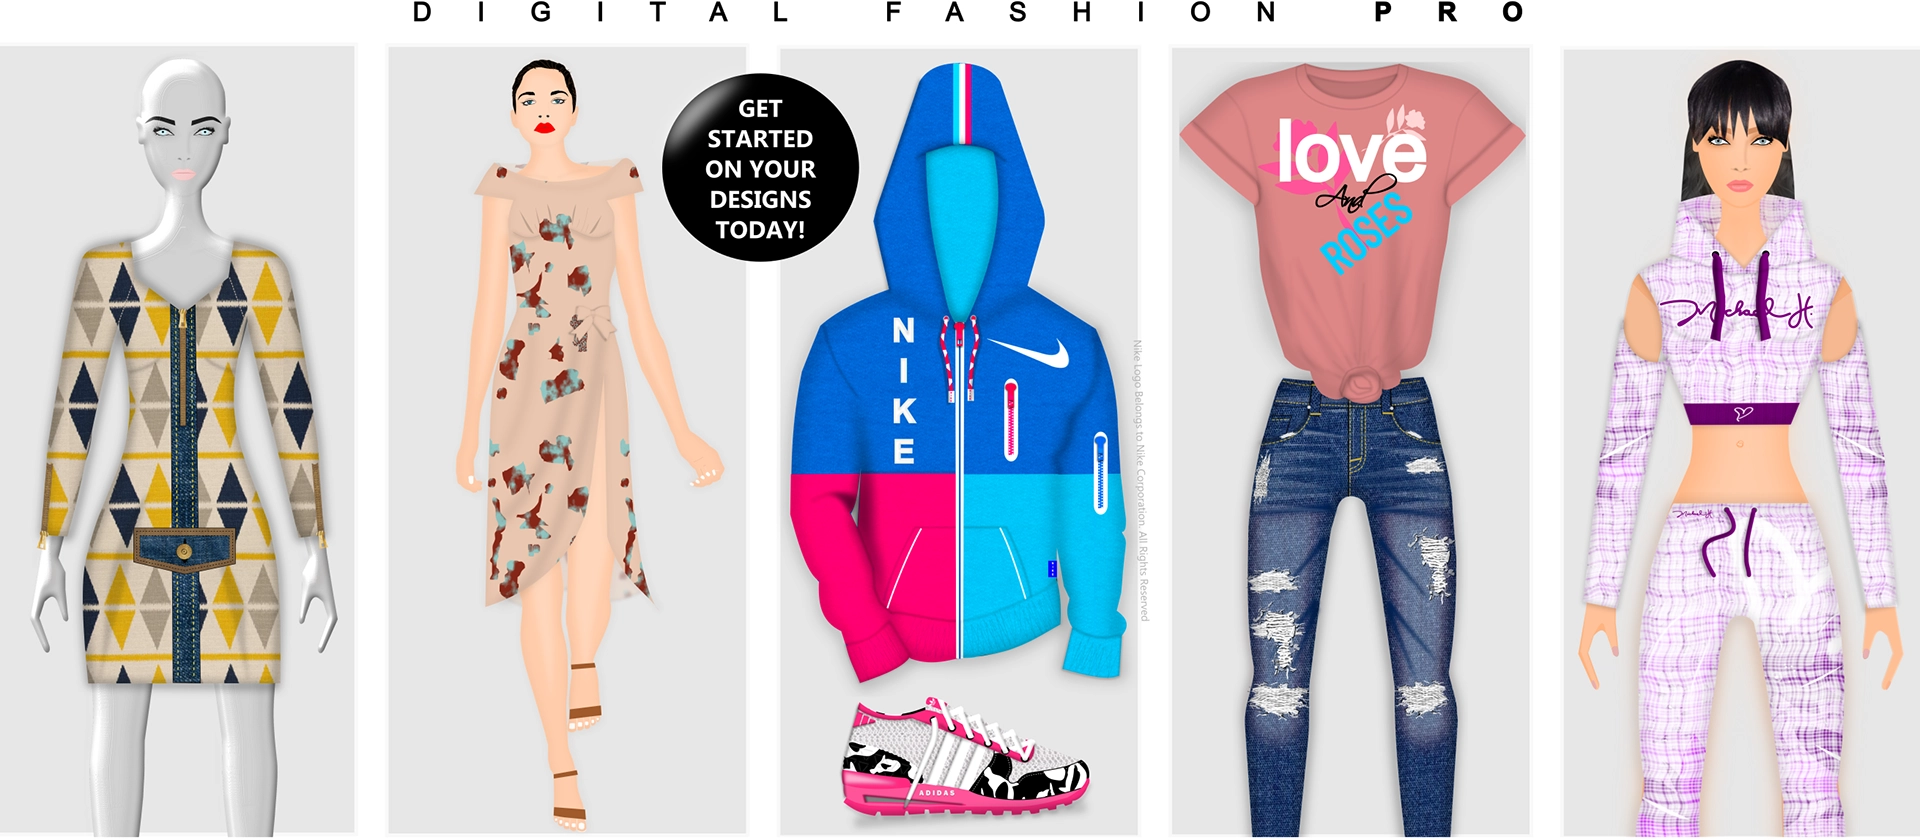 Digital Fashion Pro - Fashion Design Software - Design Your Own Clothes Sketches